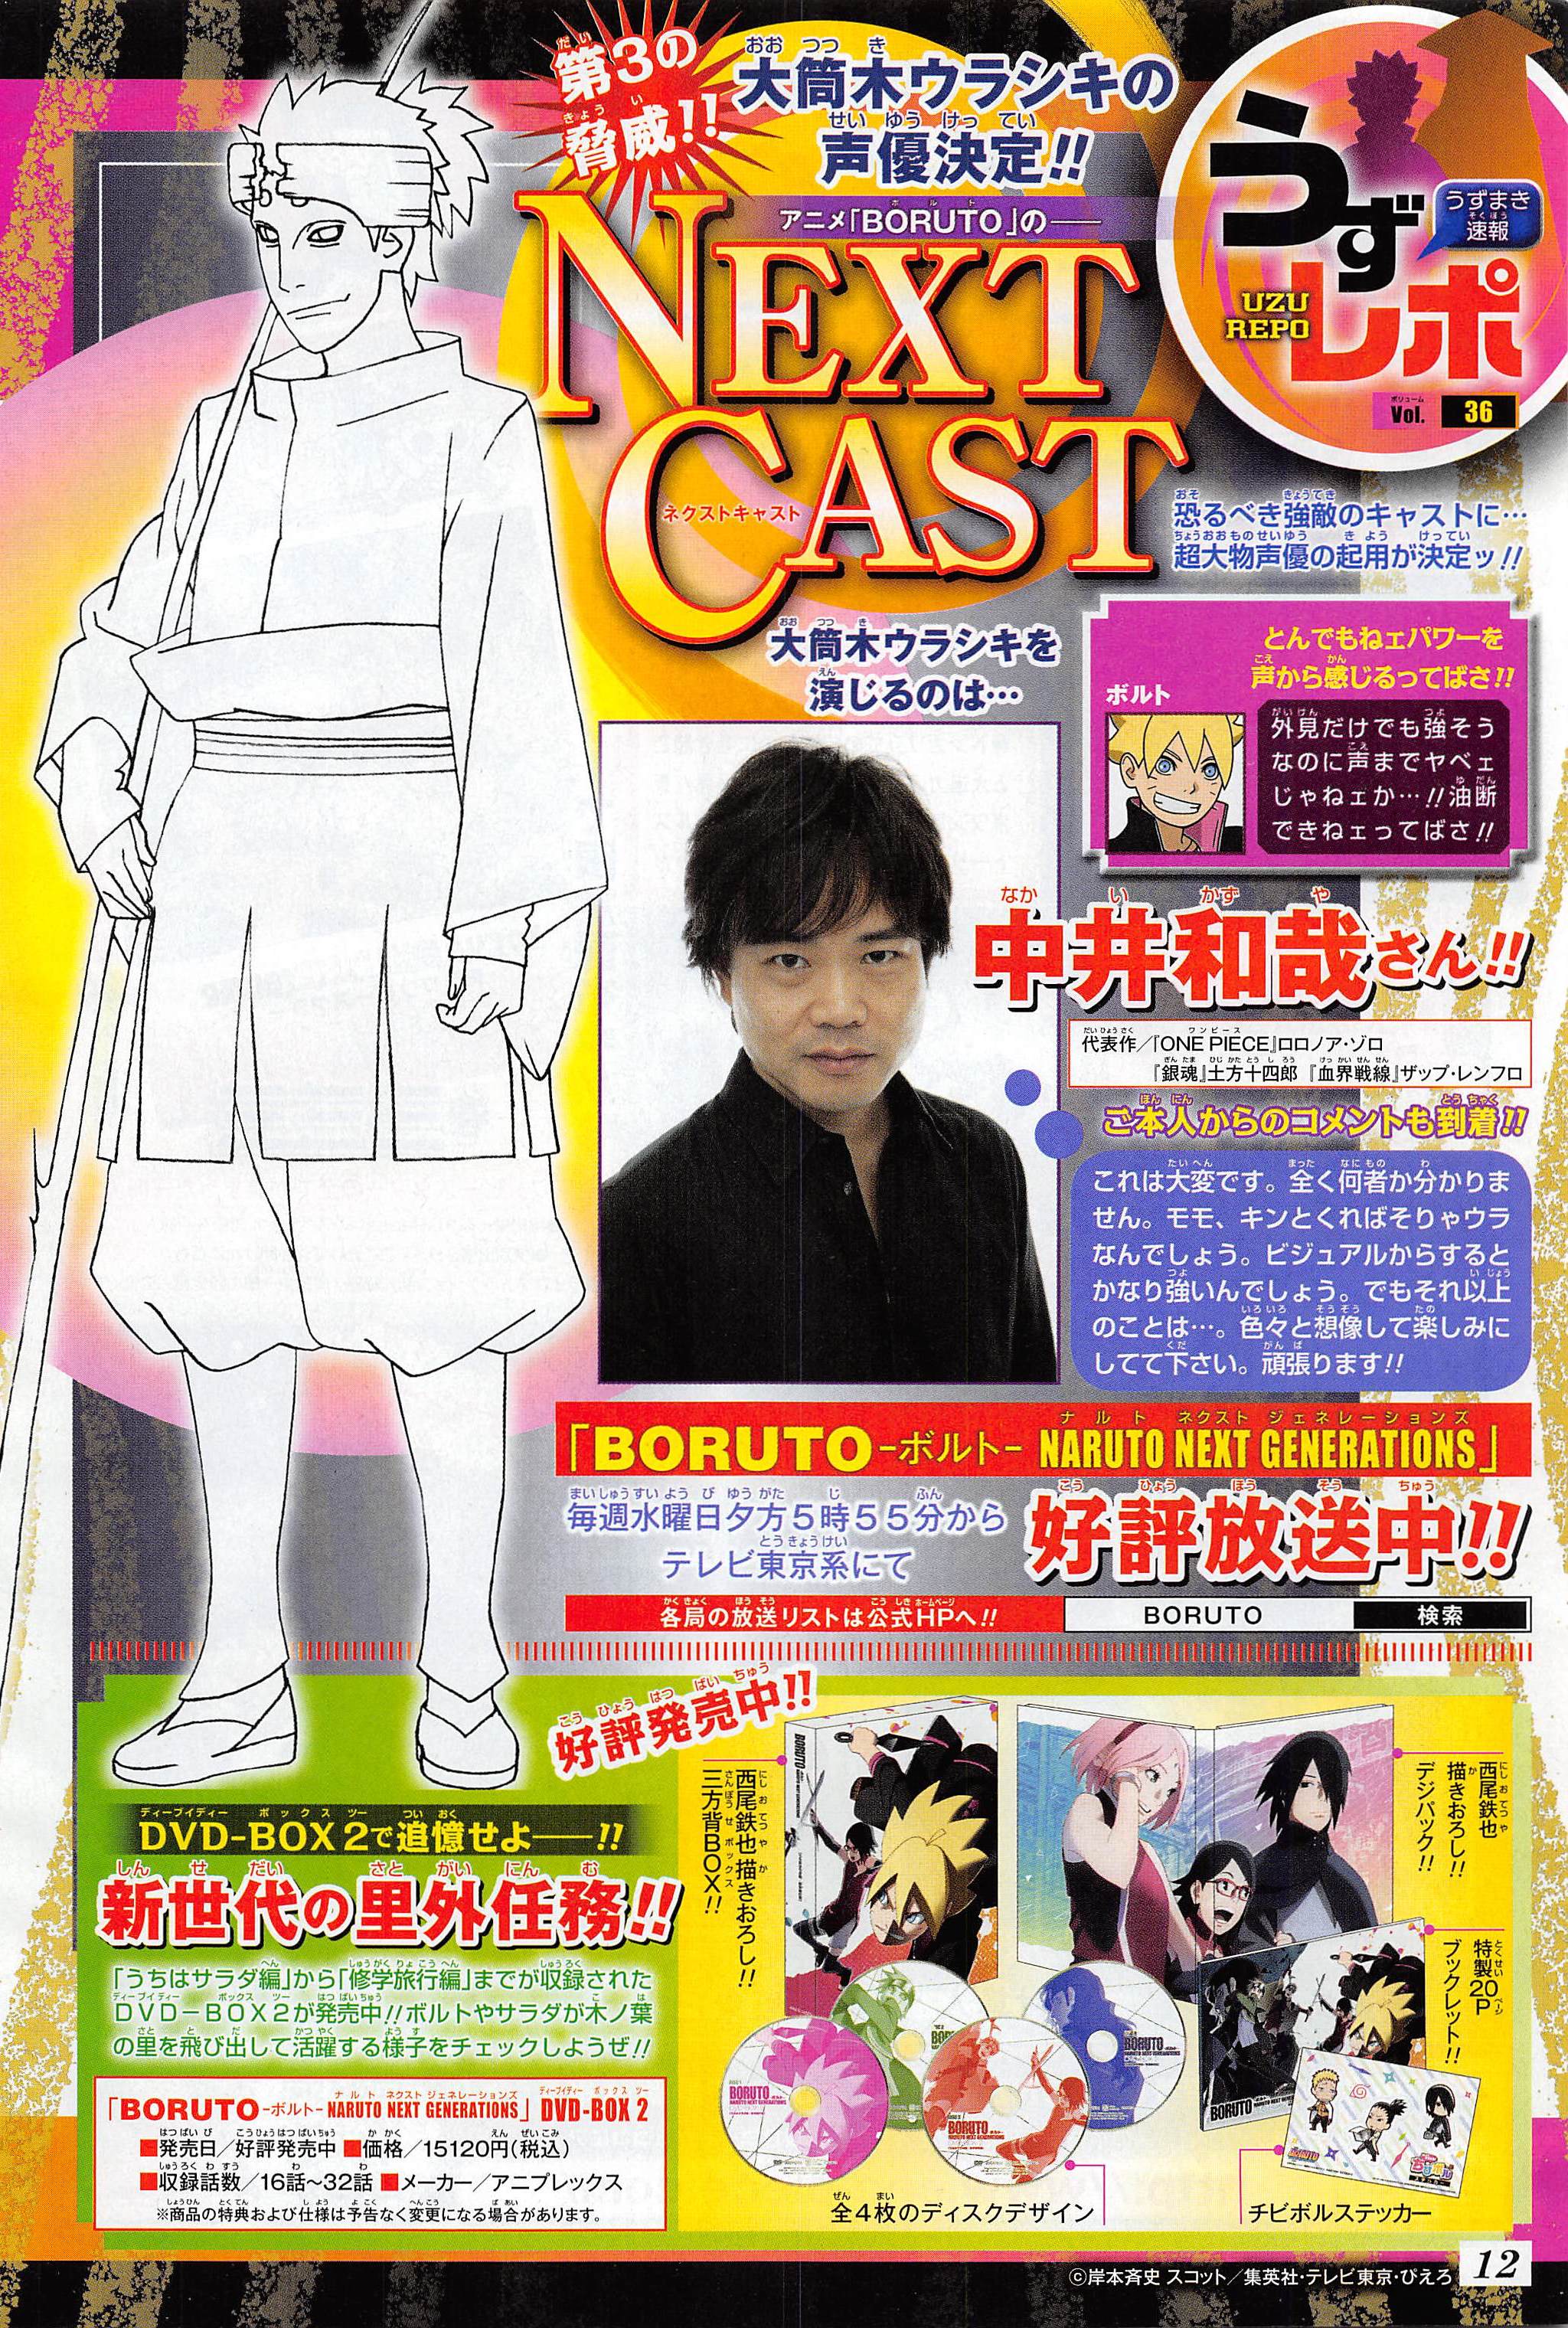 Kazuya Nakai entra para o elenco de Boruto: Naruto the Next Generations